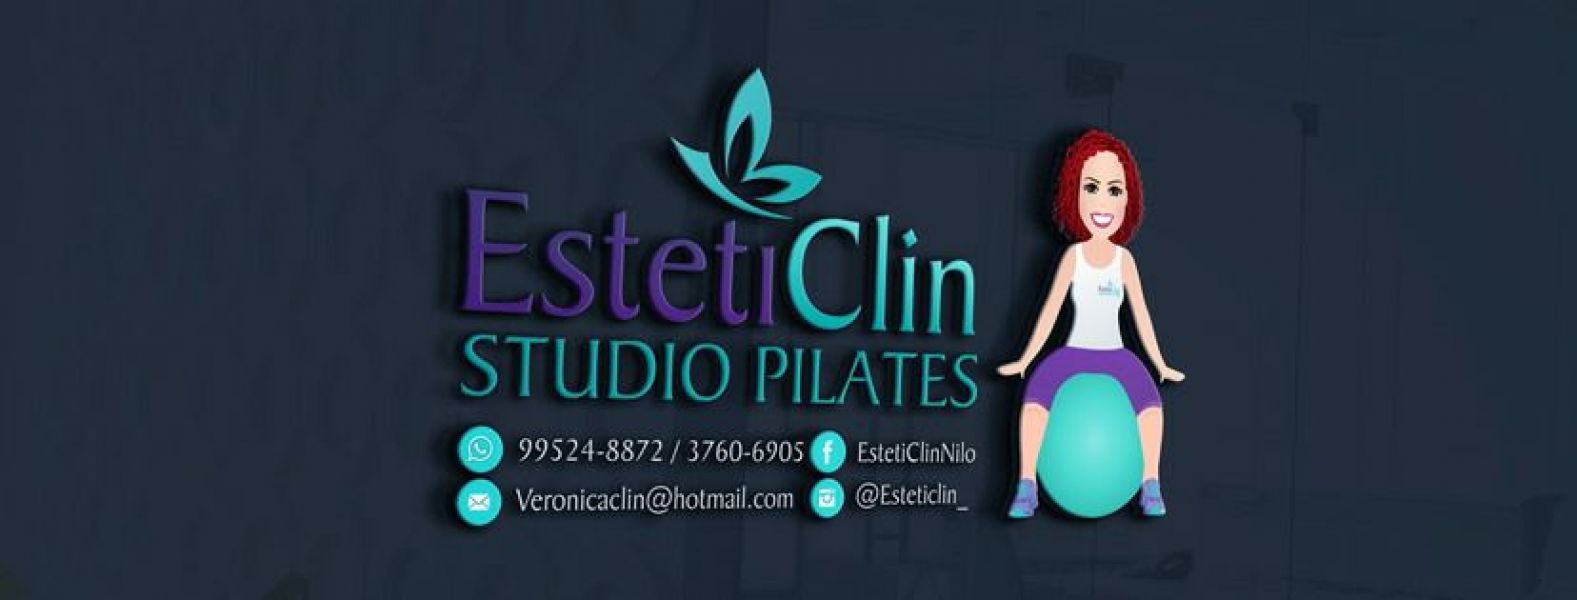 EstetiClin Studio Pilates